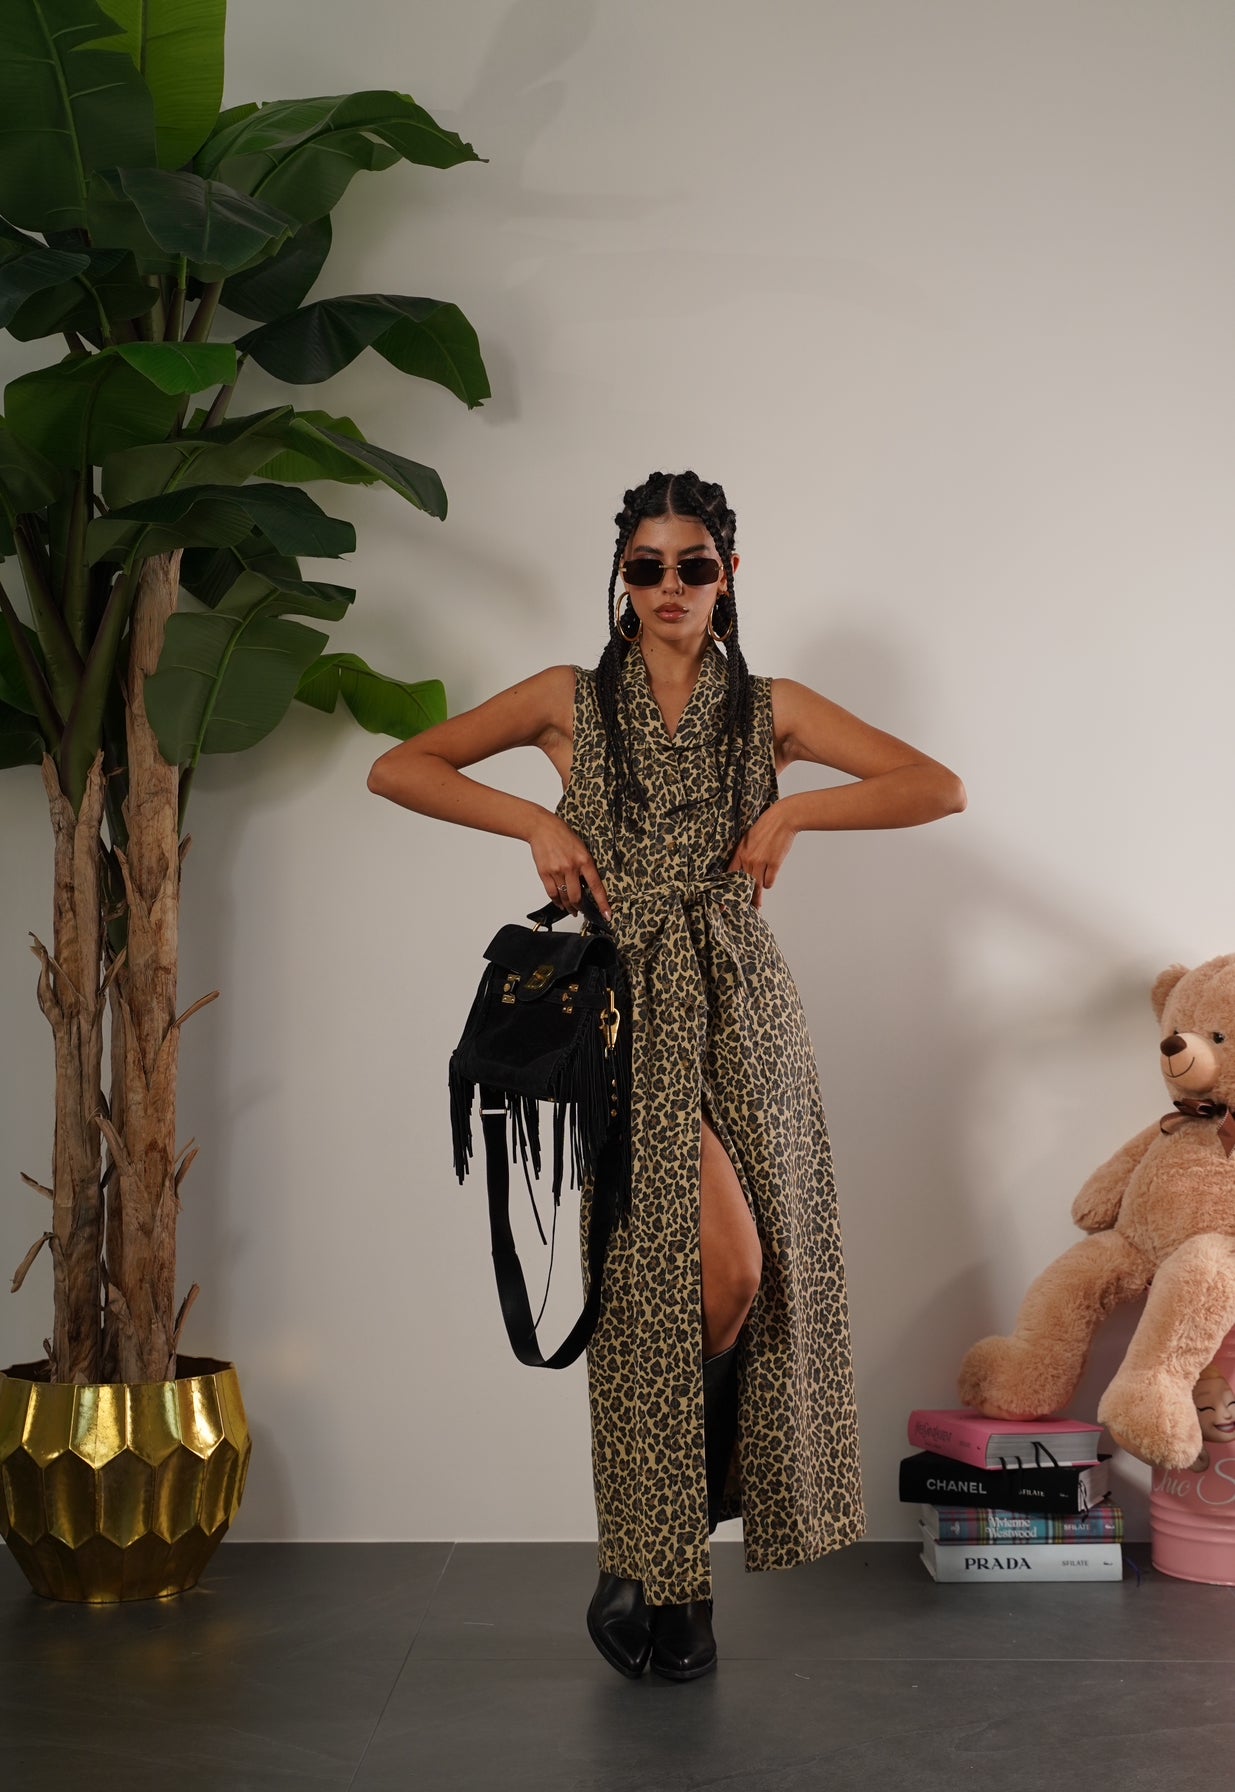 Vestito leopardato Soraya